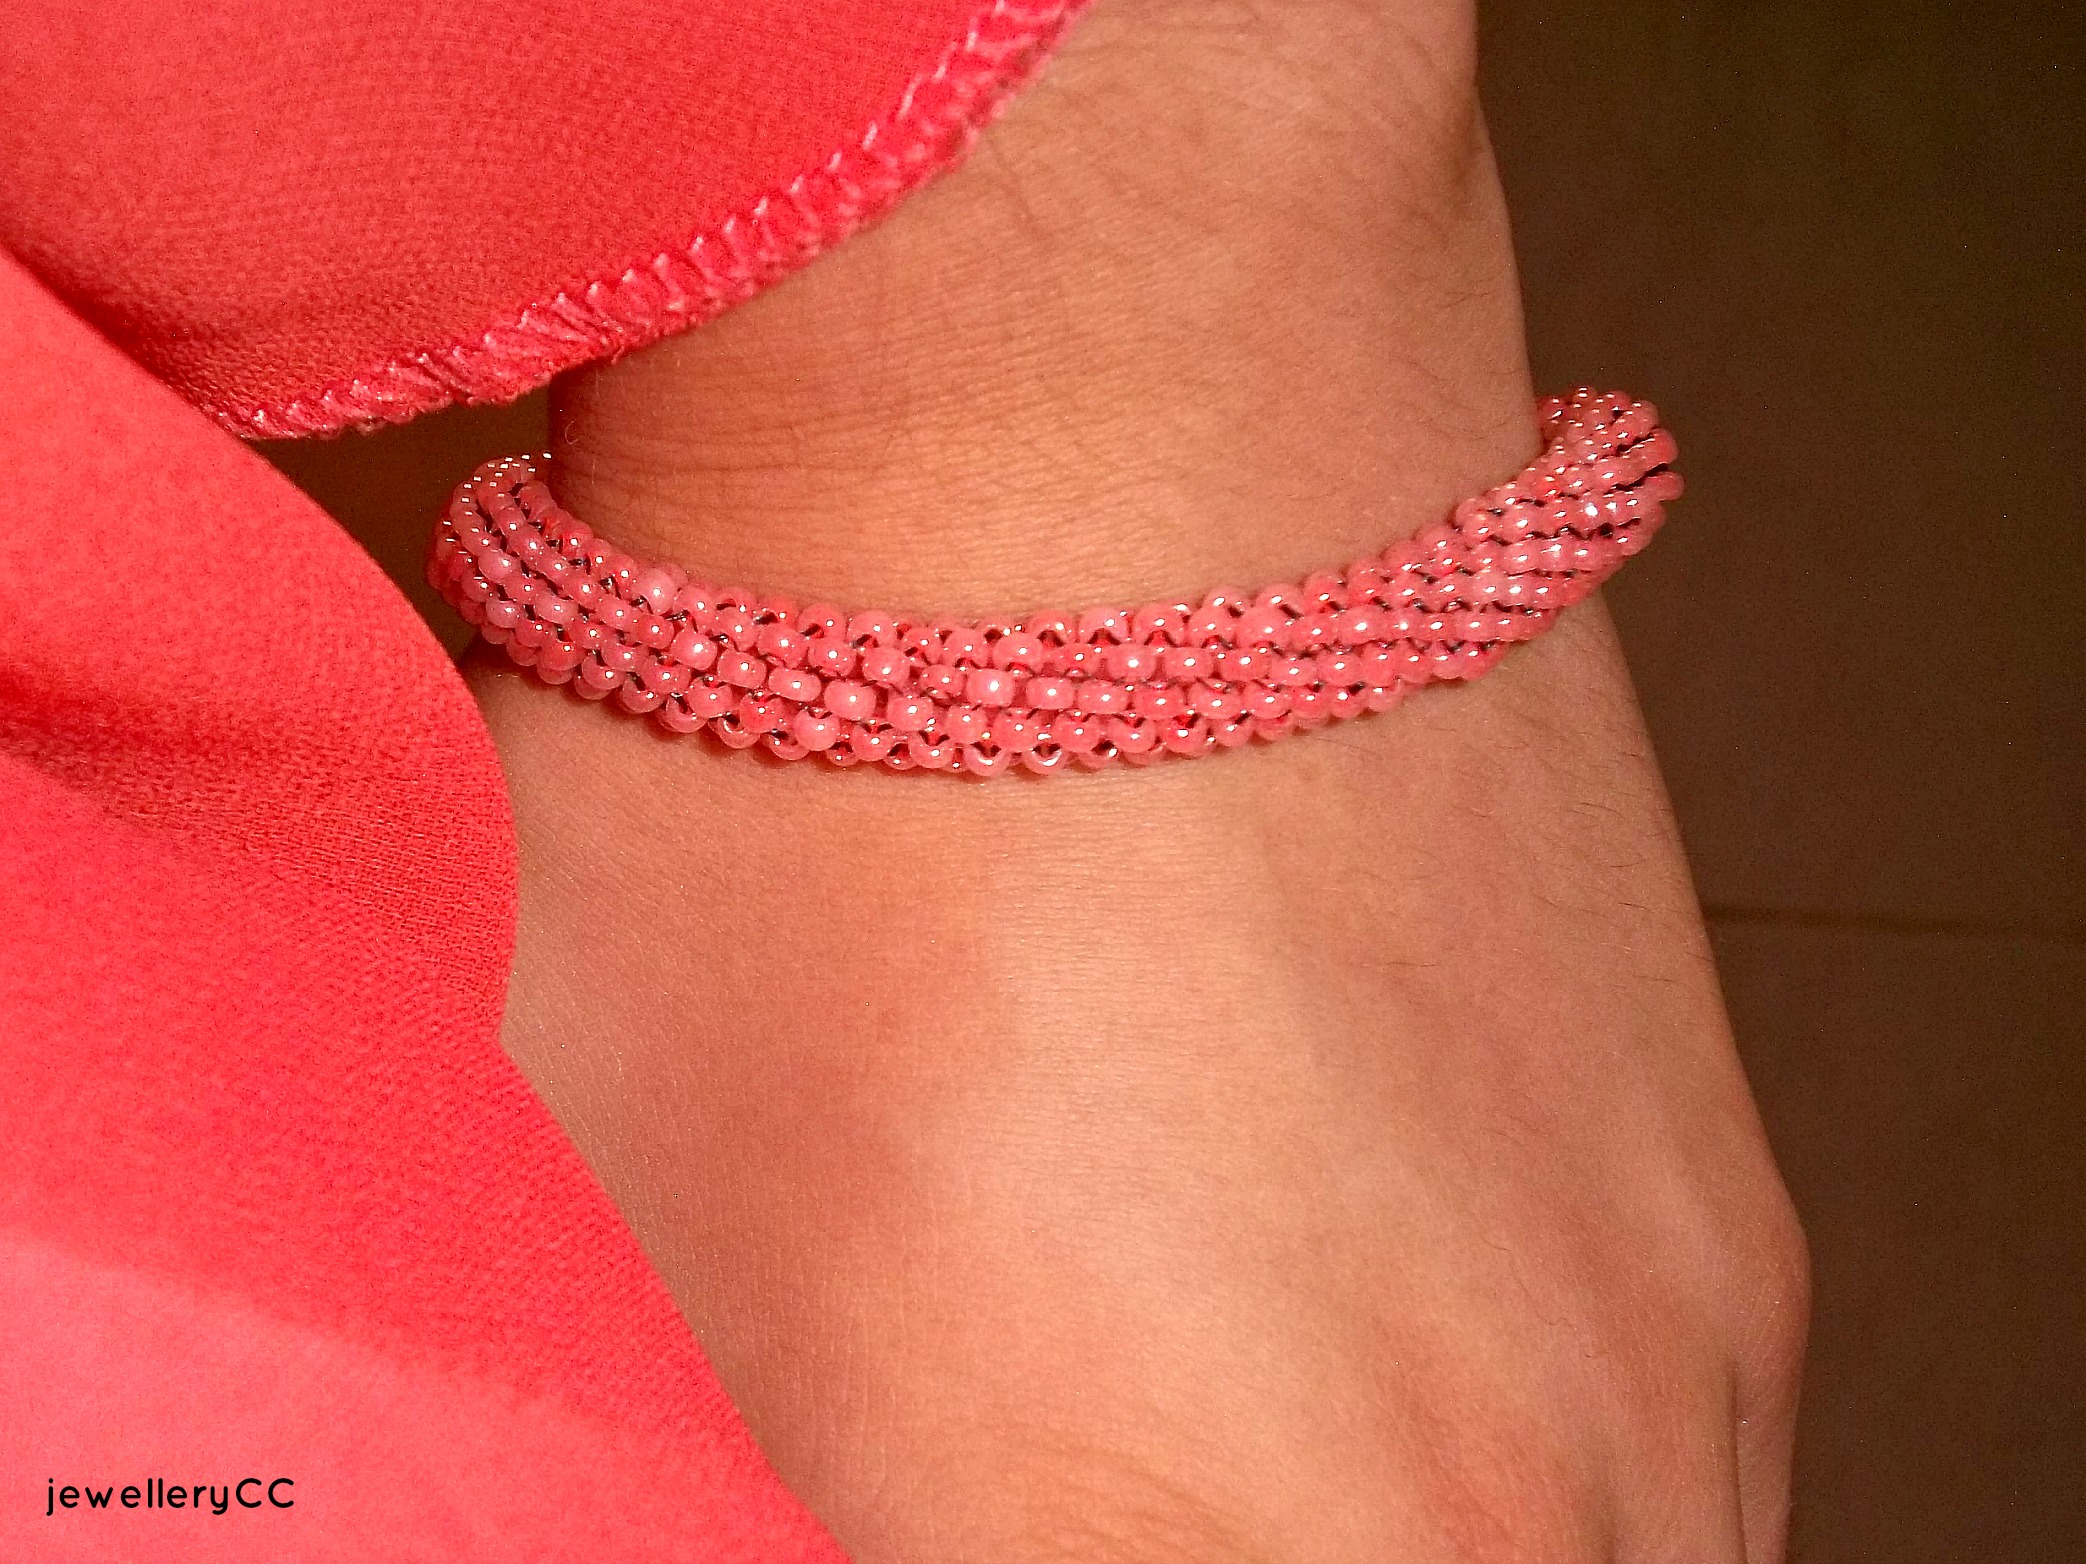 Pink beaded bracelet close up